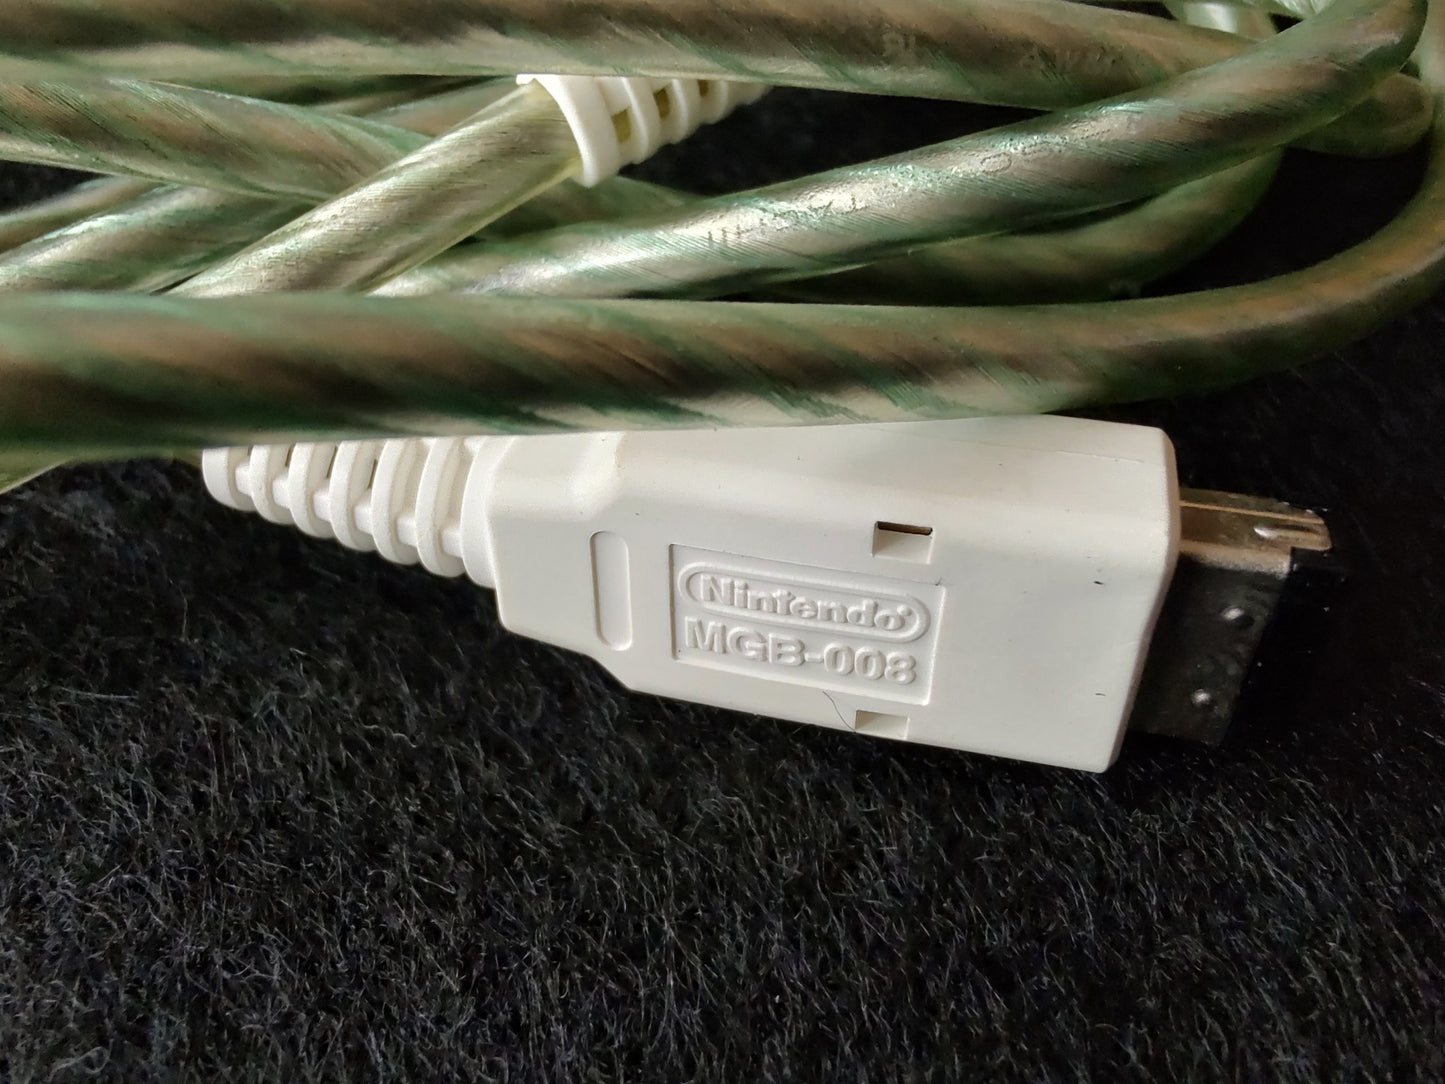 Nintendo official Gameboy Pocket Link Cable MGB-008 w/Box set-f0602-